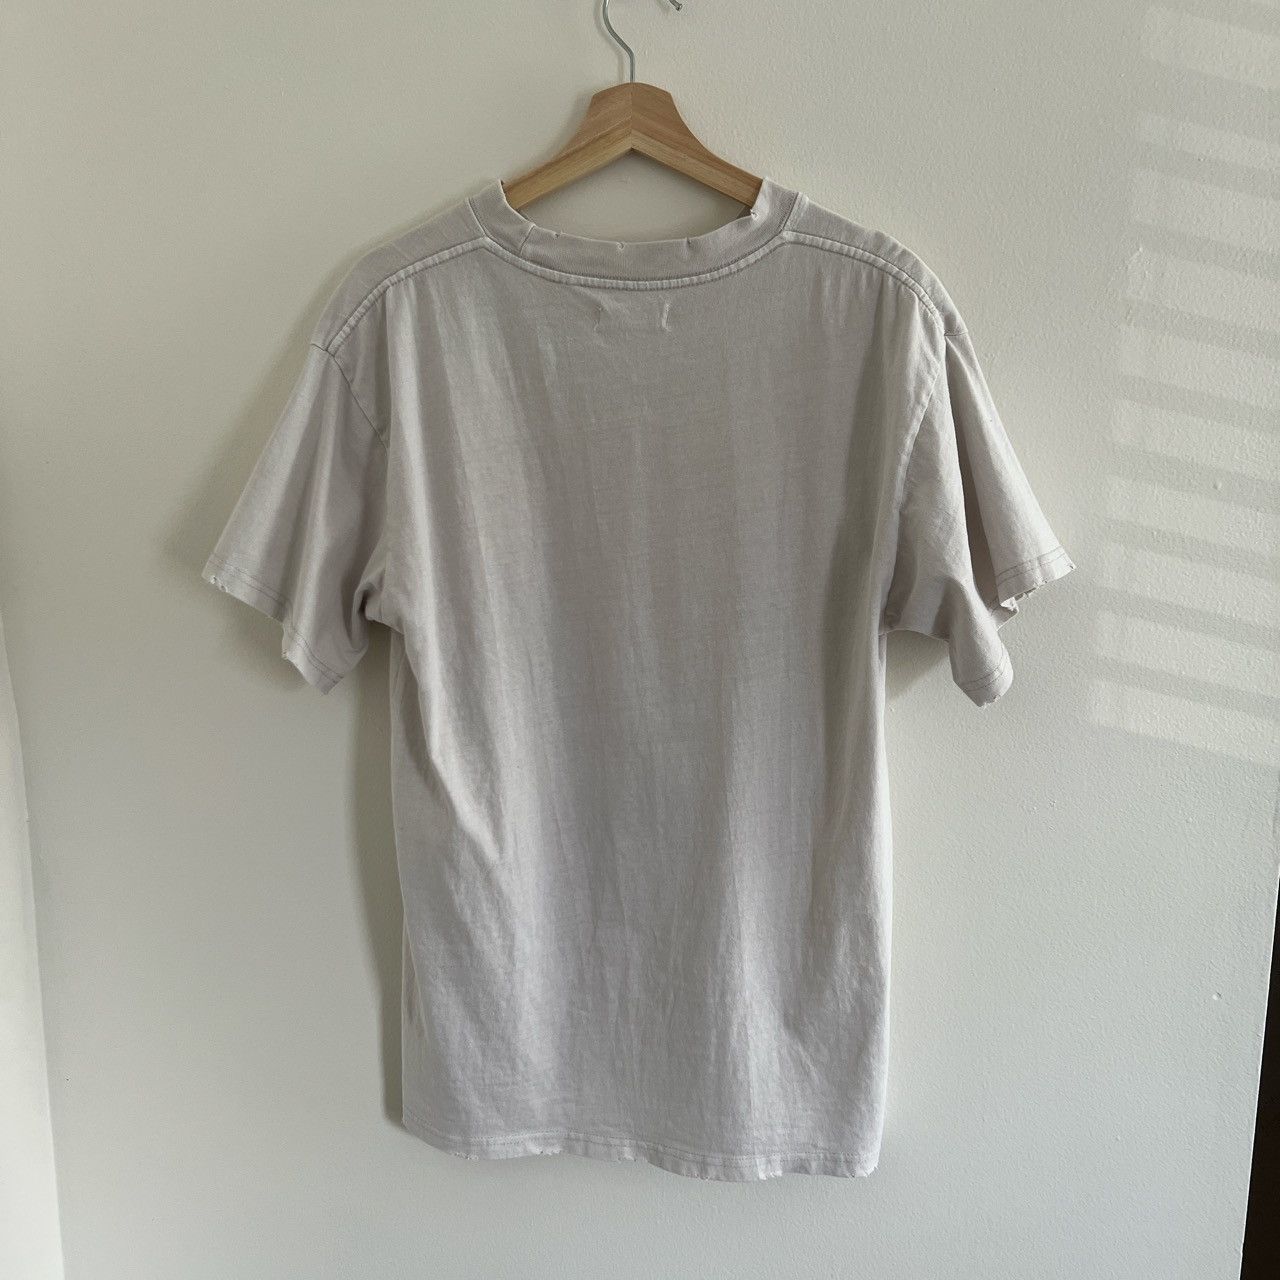 Pacsun PacSun Distressed Light White Cream T-Shirt Size US M / EU 48-50 / 2 - 3 Preview